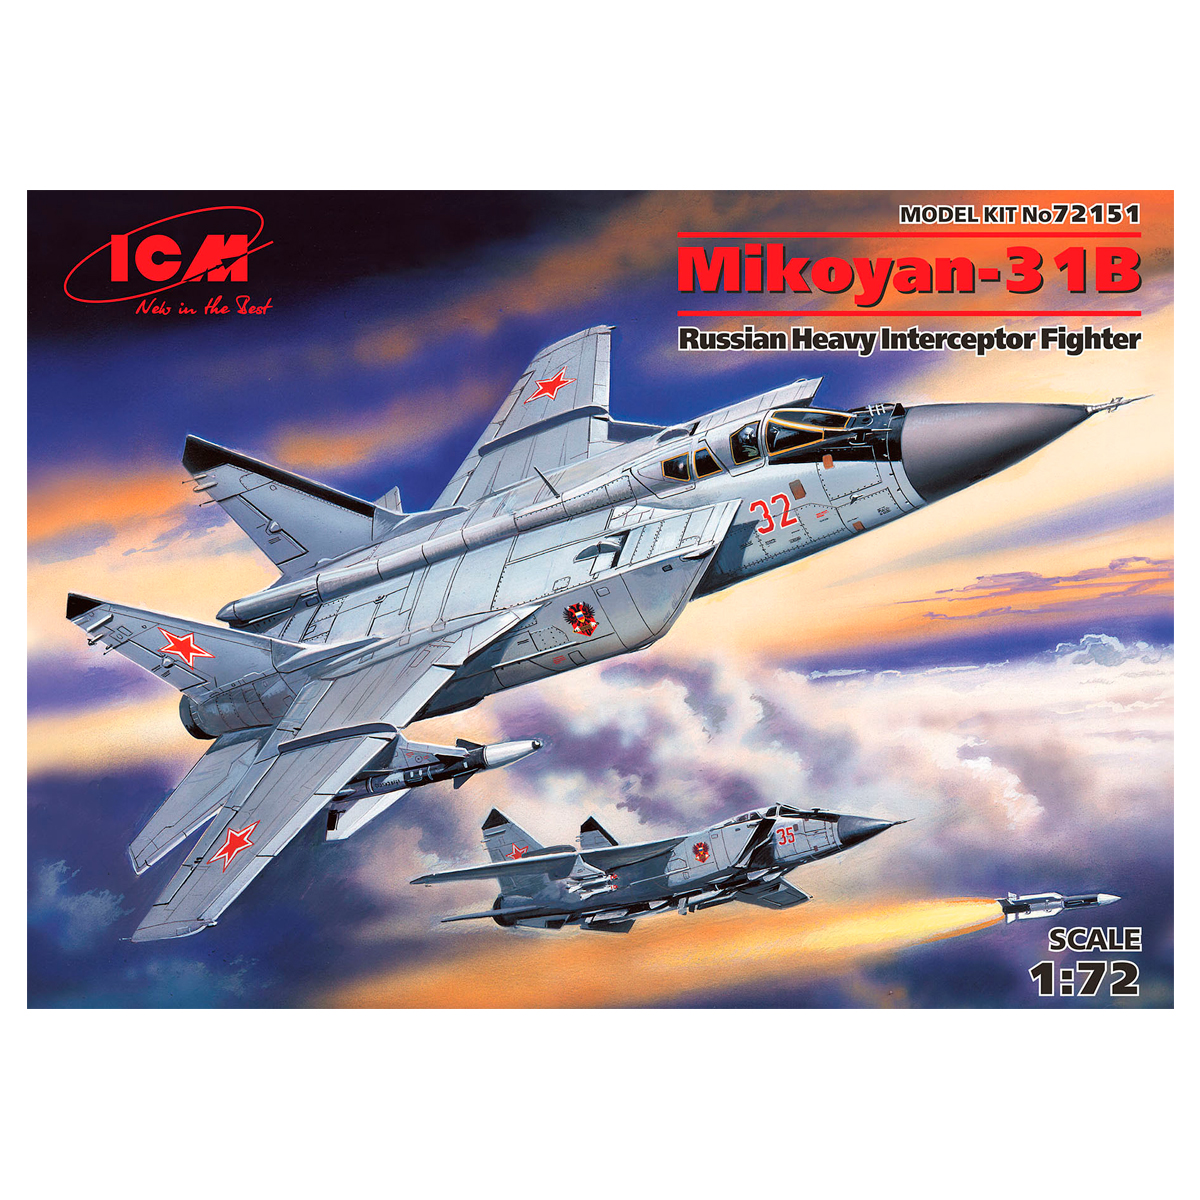 Mikoyan-31B, Russian Heavy Interceptor Fighter 1/72